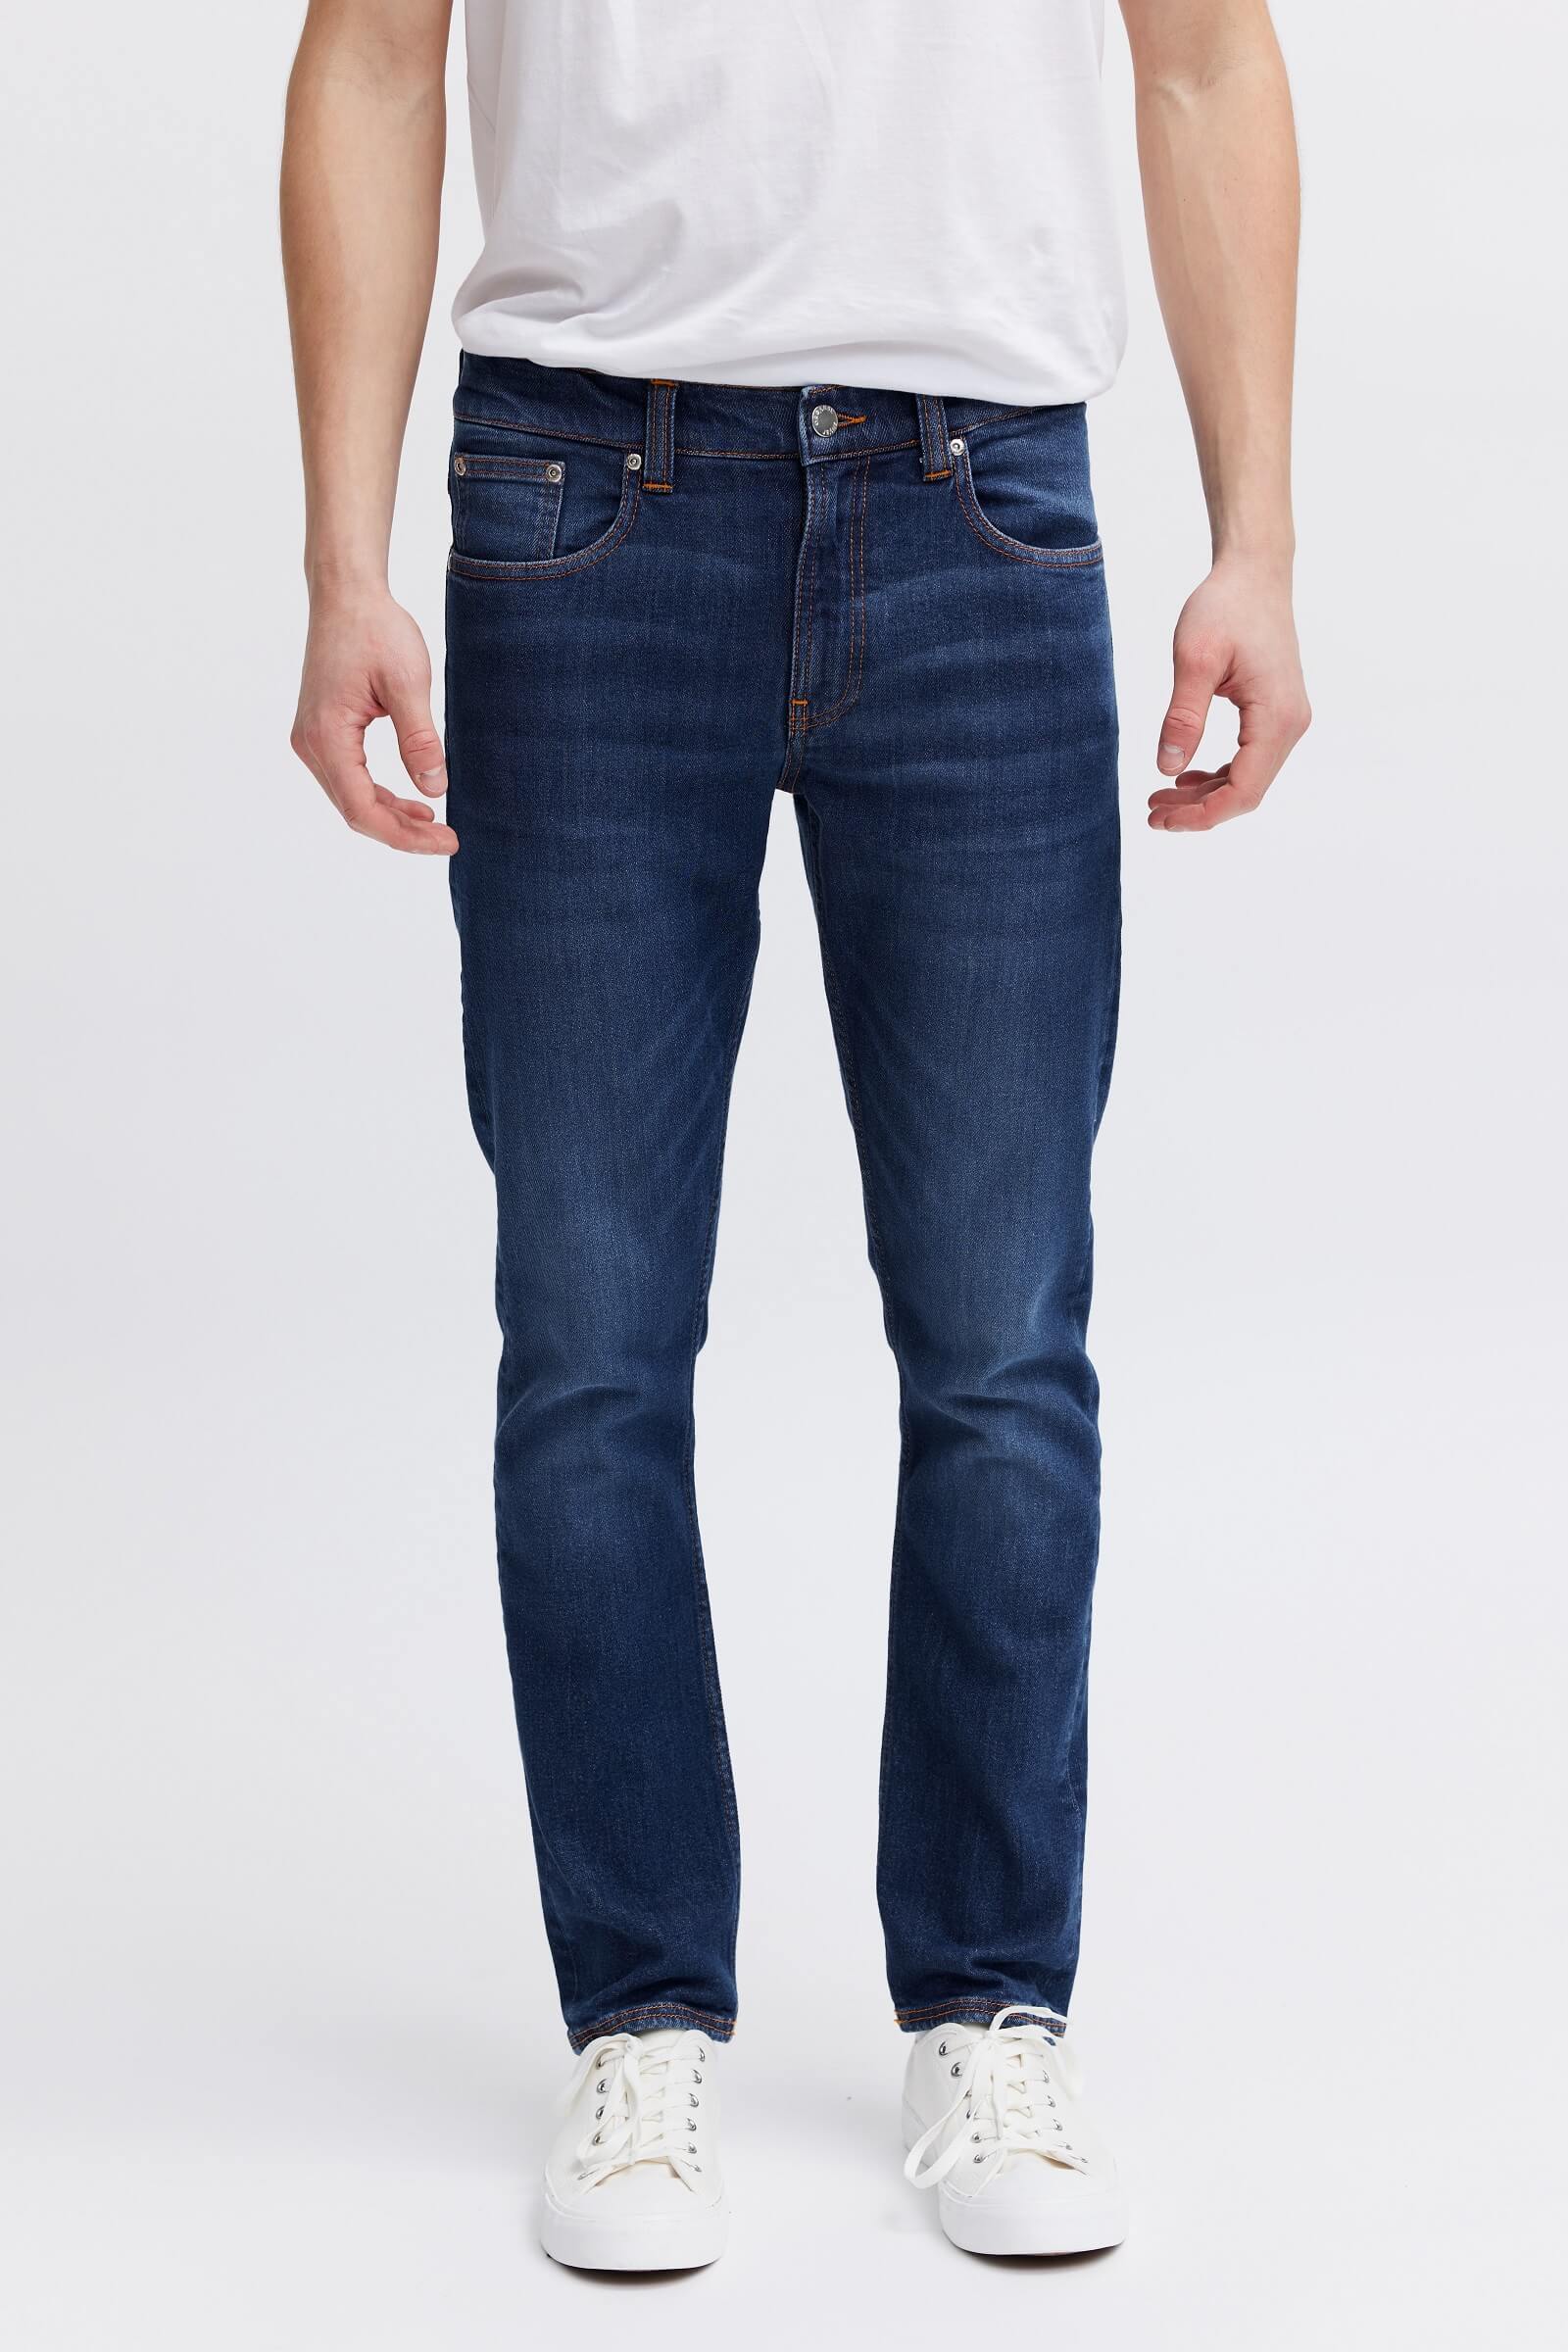 Organic comfy jeans for men 